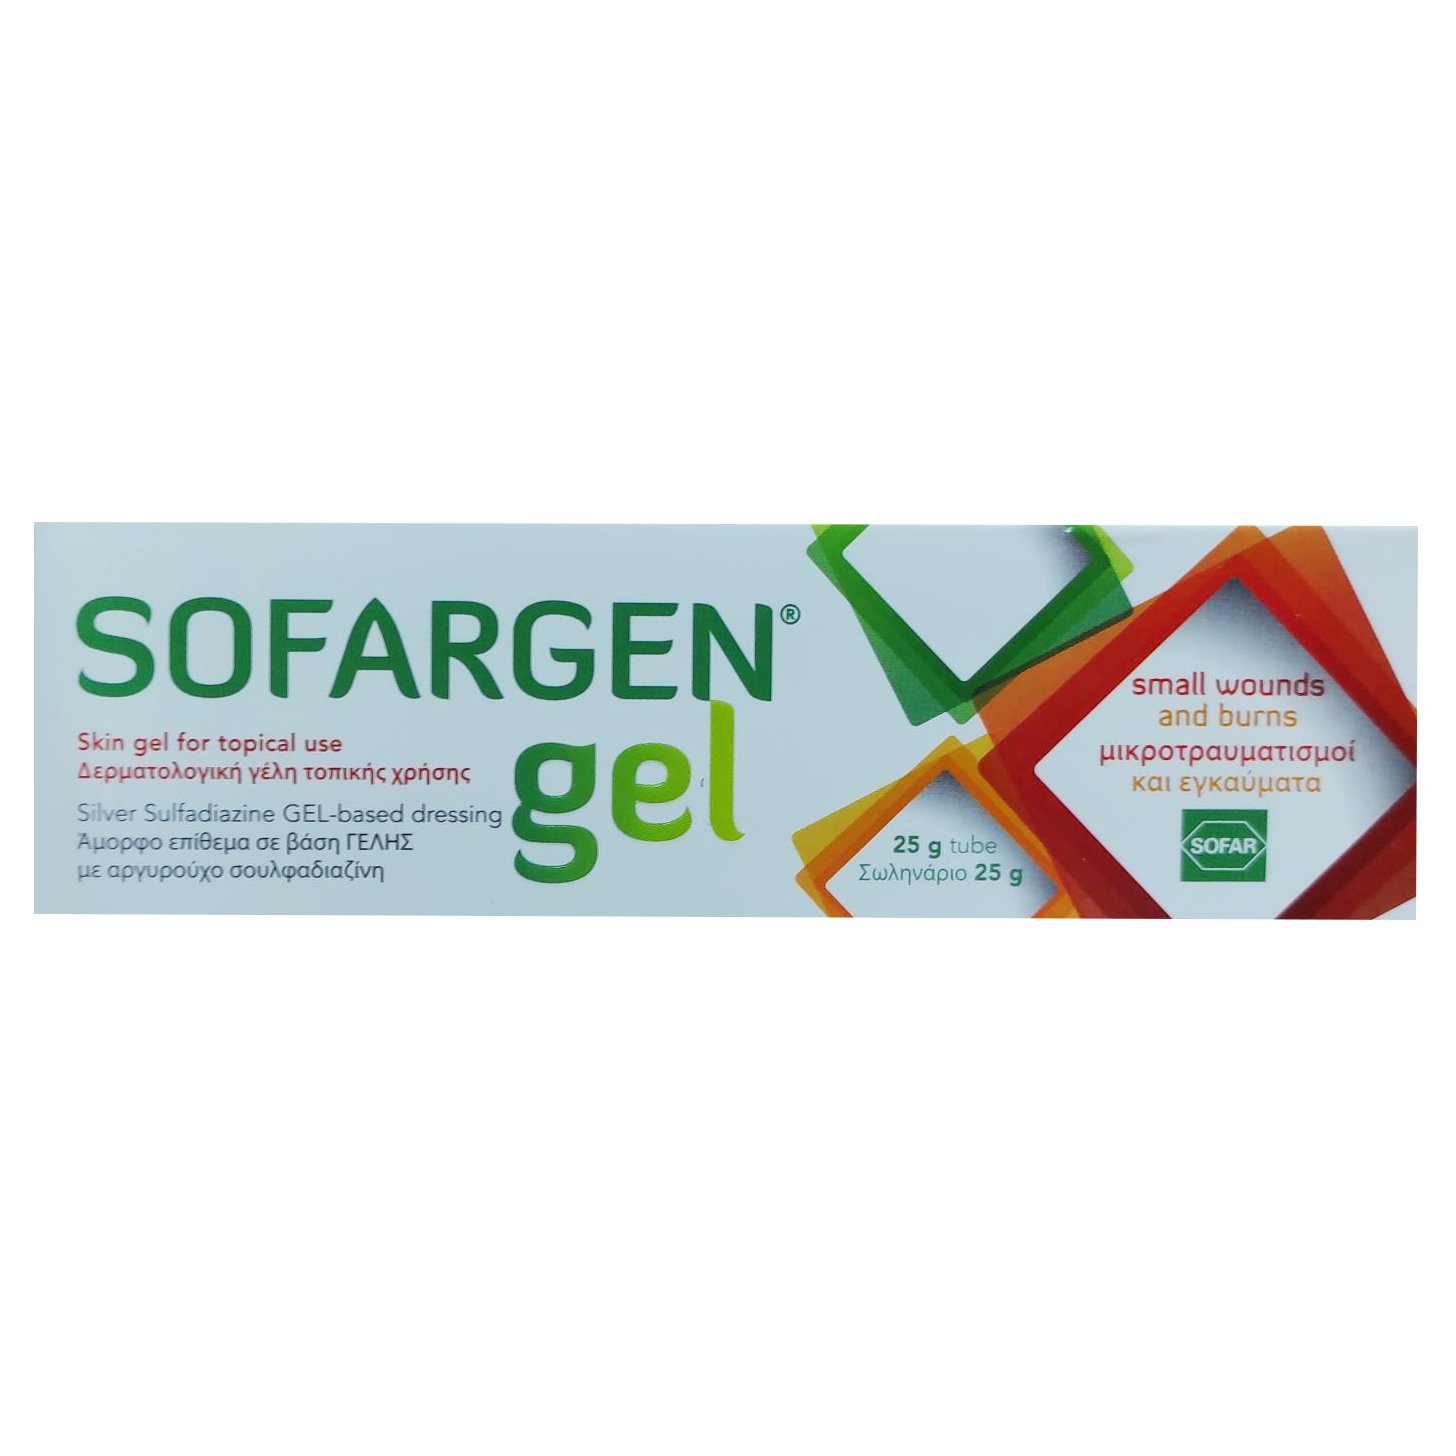 Sofargen Sofargen Gel Small Wounds & Burns Δερματολογική Γέλη για την Αντιμετώπιση Μικροτραυμάτων, Ερεθισμών & Εγκαυμάτων 25g